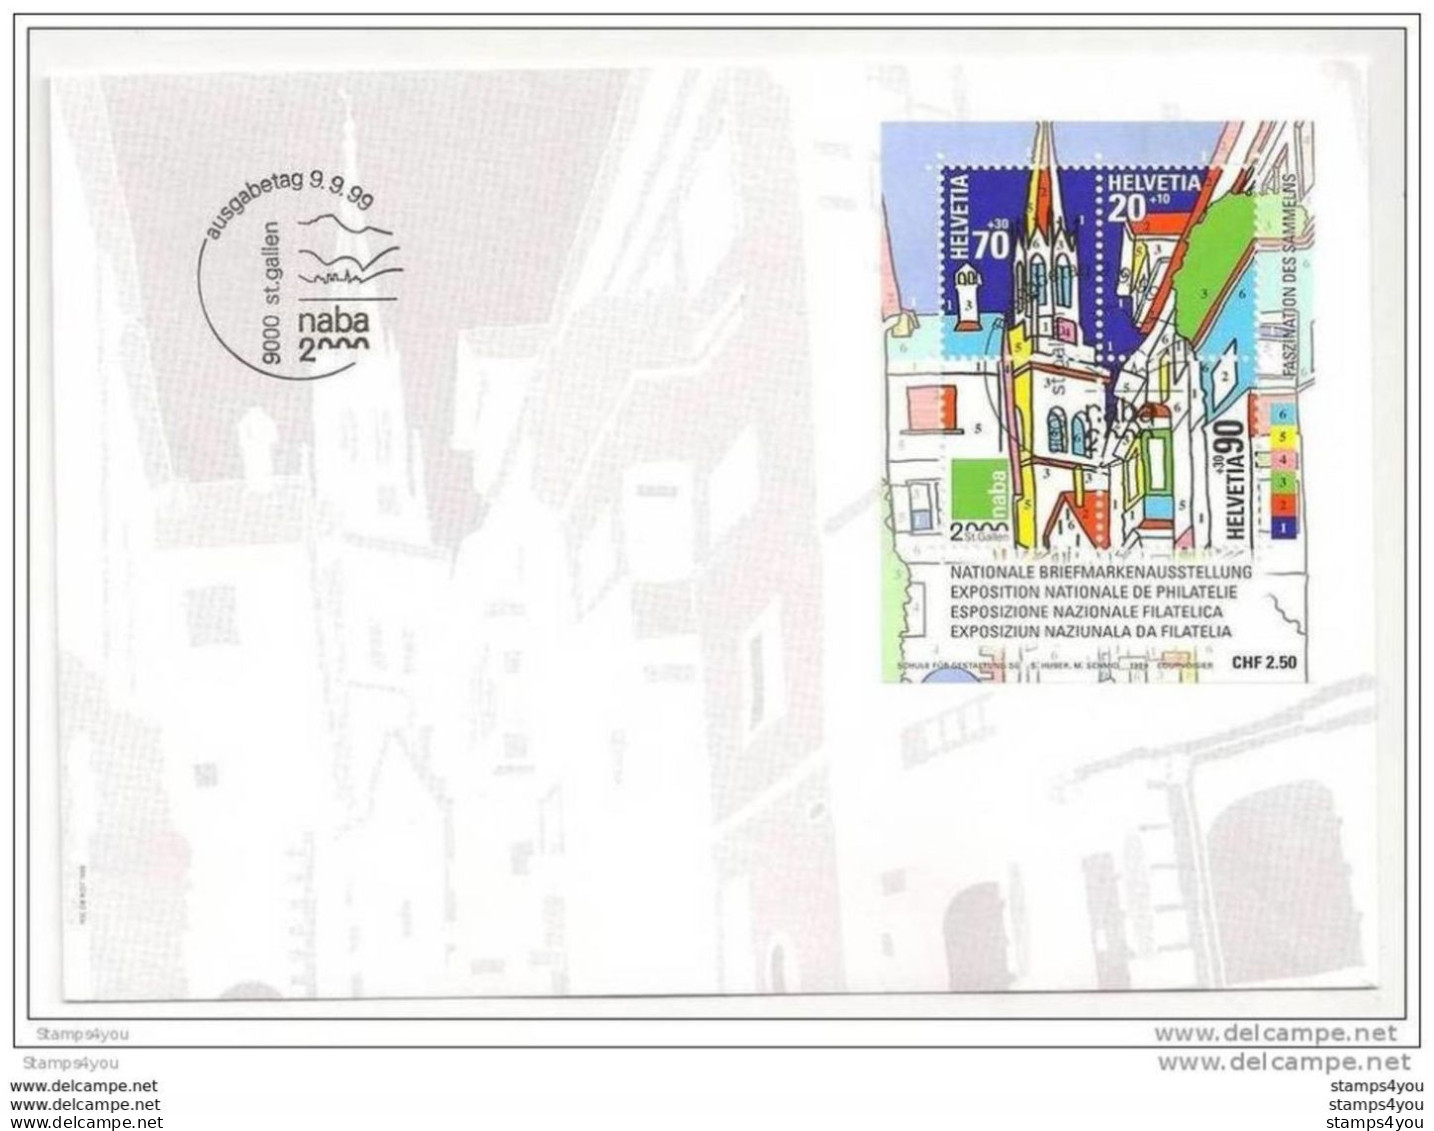 GG - 0211 - Enveloppe Suisse Avec Bloc Expor NABA 2000 St Gallen  9.9.99. - Esposizioni Filateliche